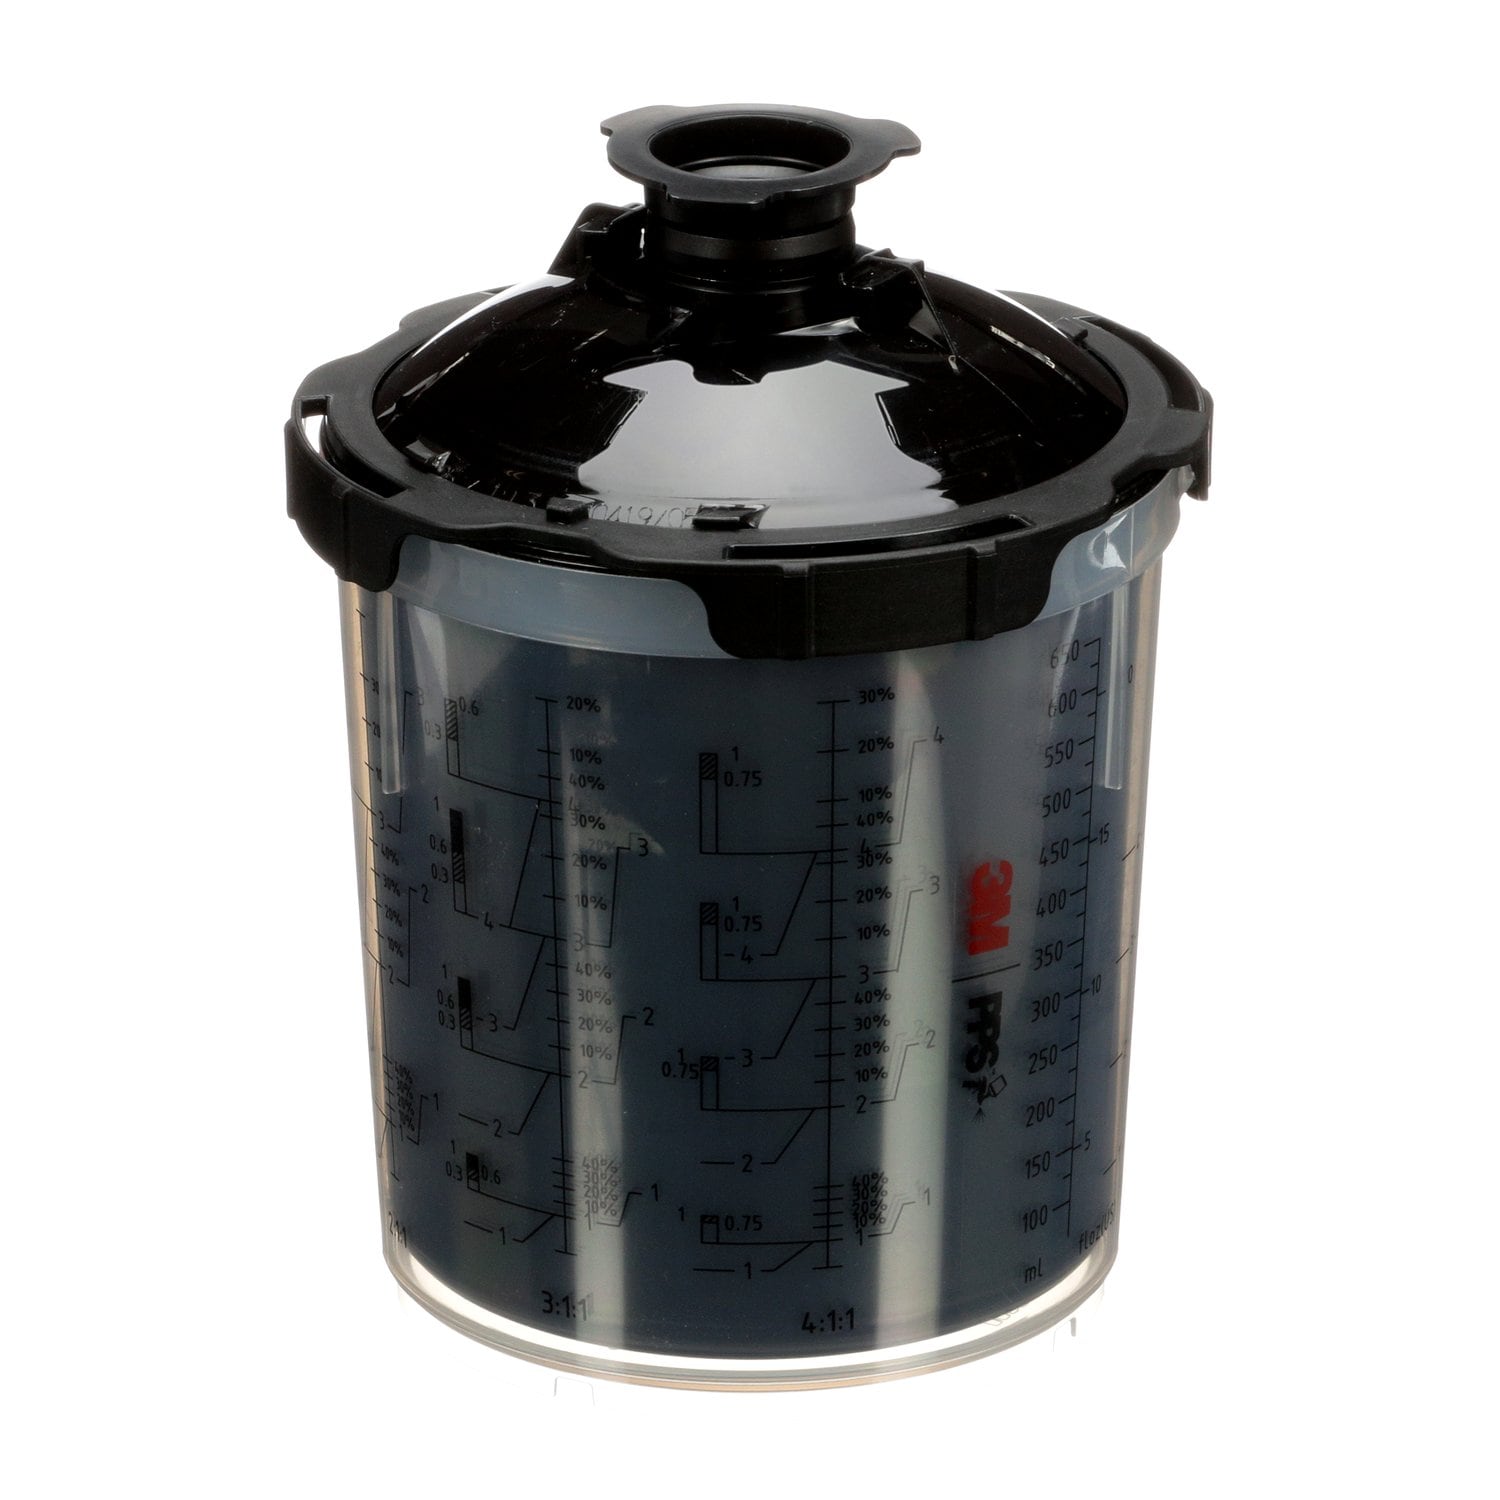 7100298478 - 3M PPS Series 2.0 Spray Cup System UV Kit 20730, Standard (22 fl oz, 650 mL), 125u Micron Filter, 1 Kit/Case